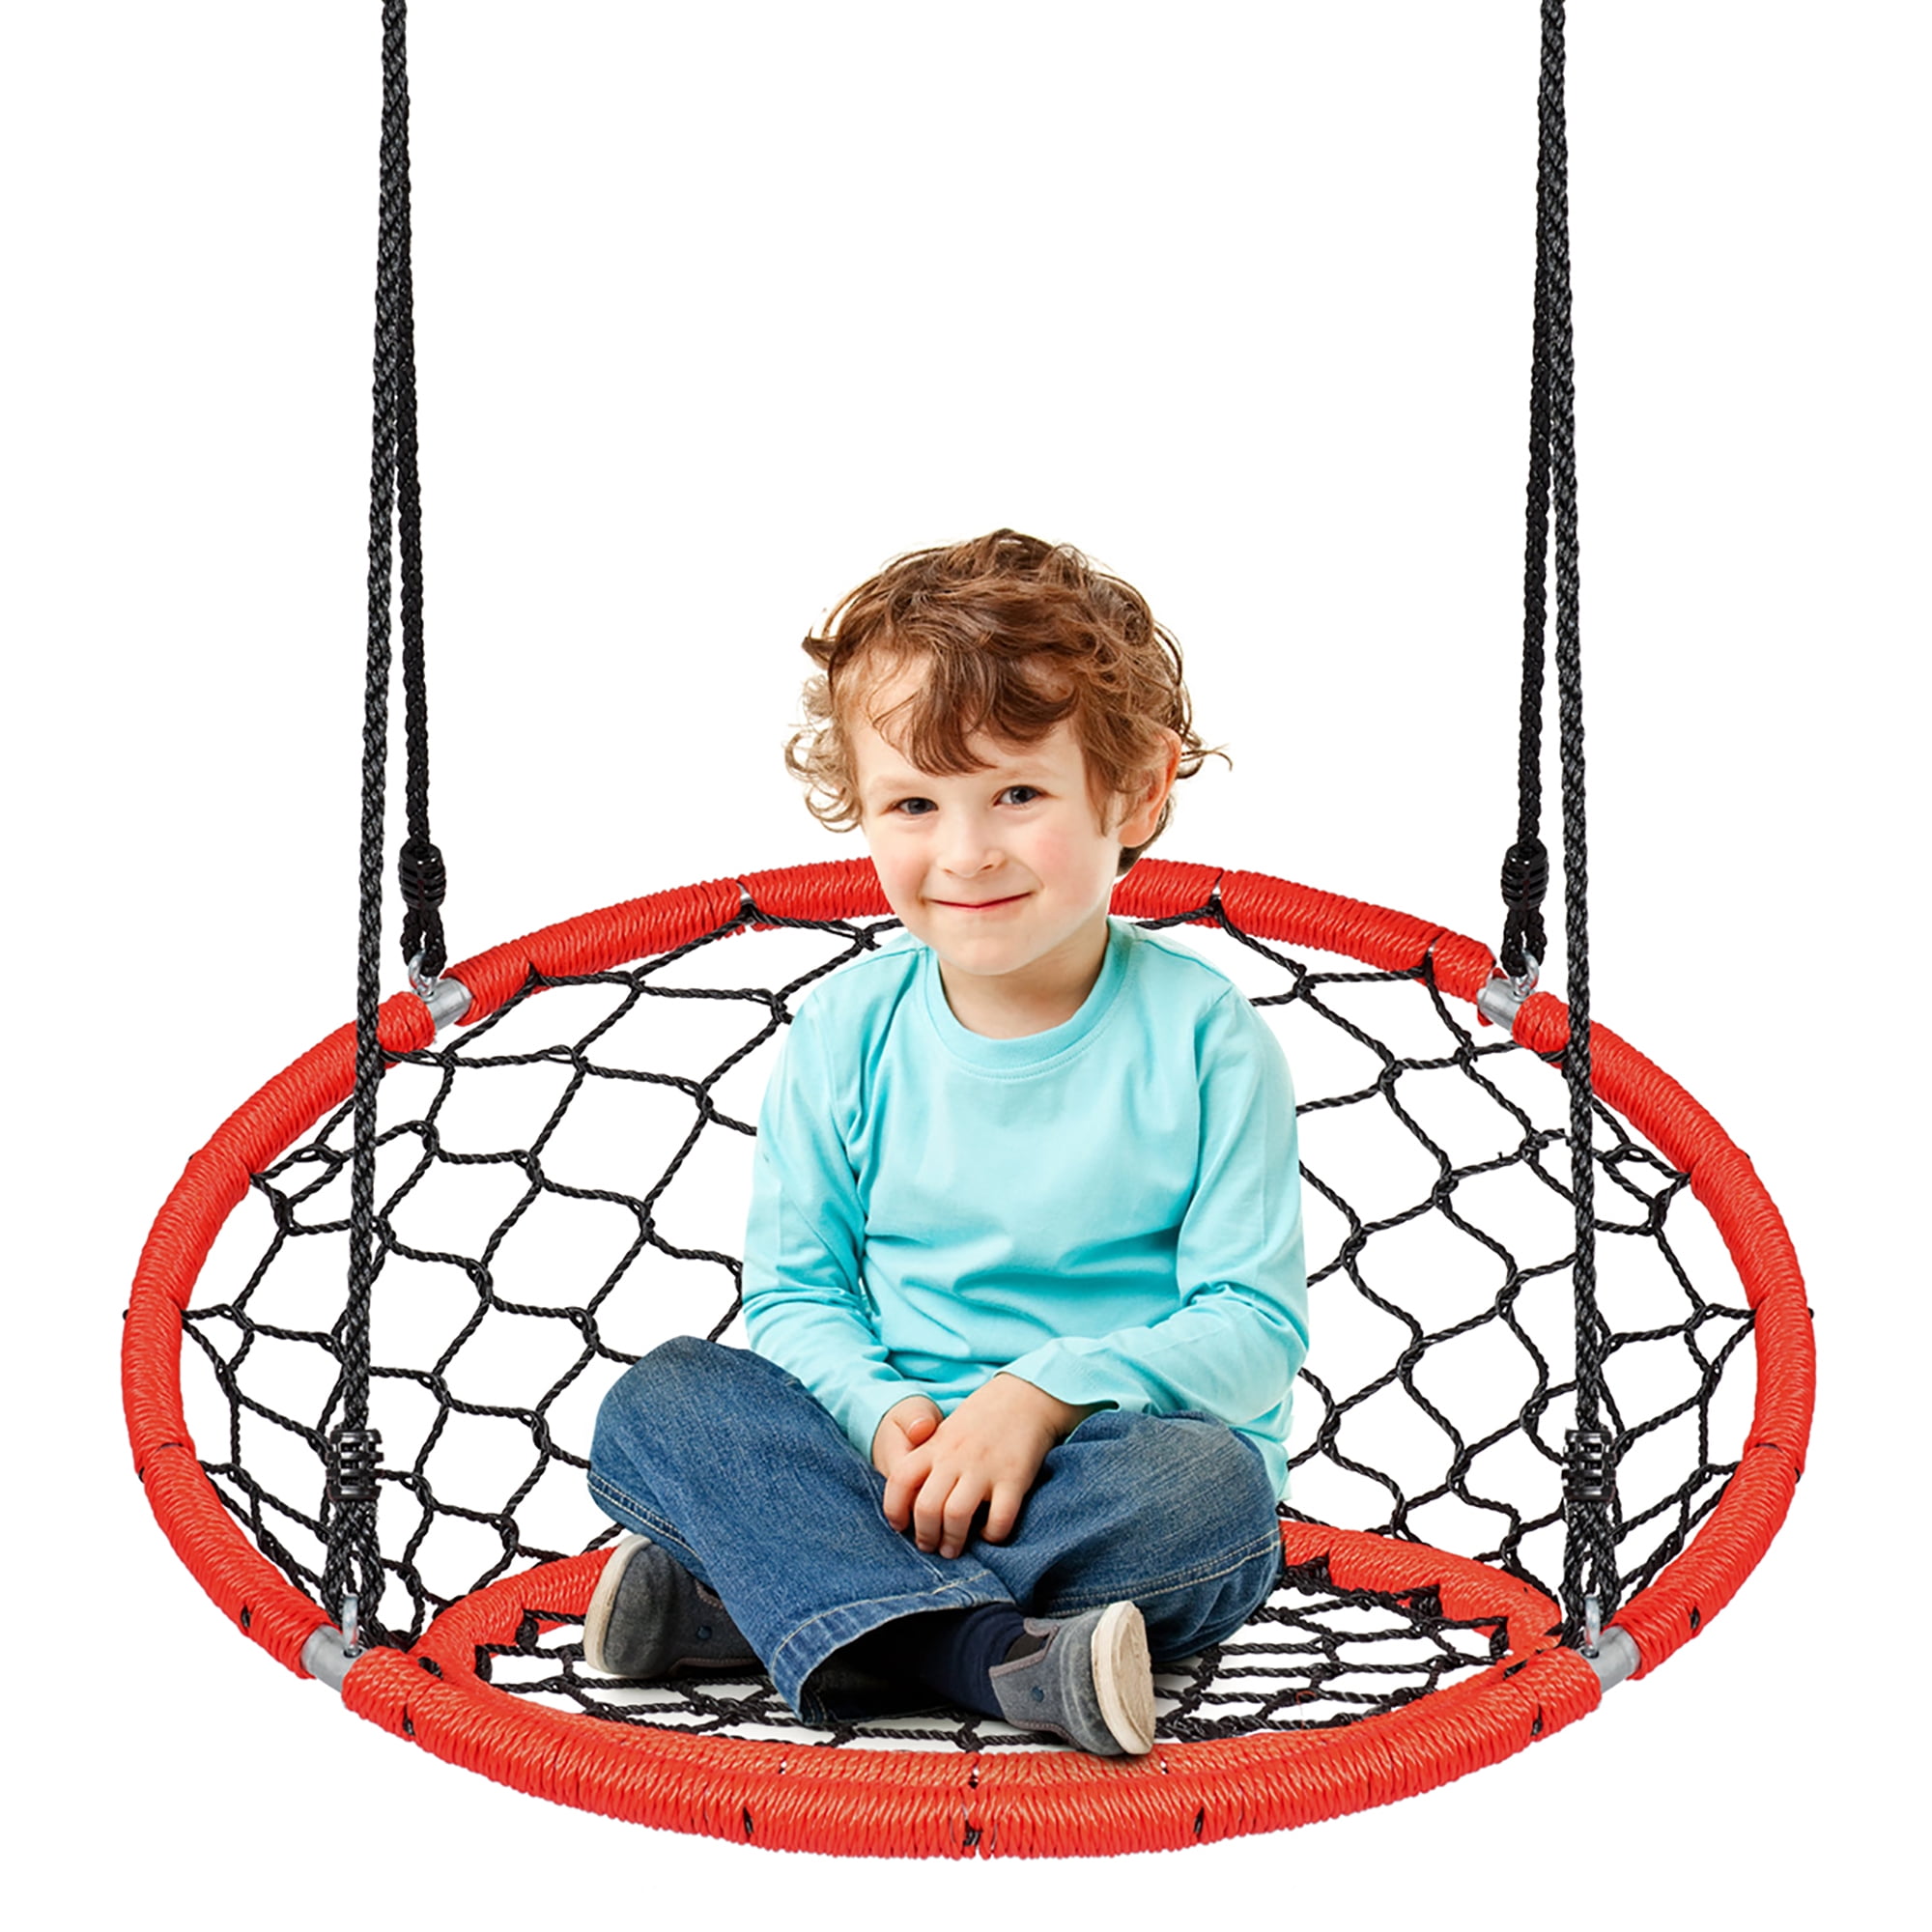 Wooden Swing Kids Seat Swing Rope Tree Fun Outdoor Summer Play 264lbs Capicity 